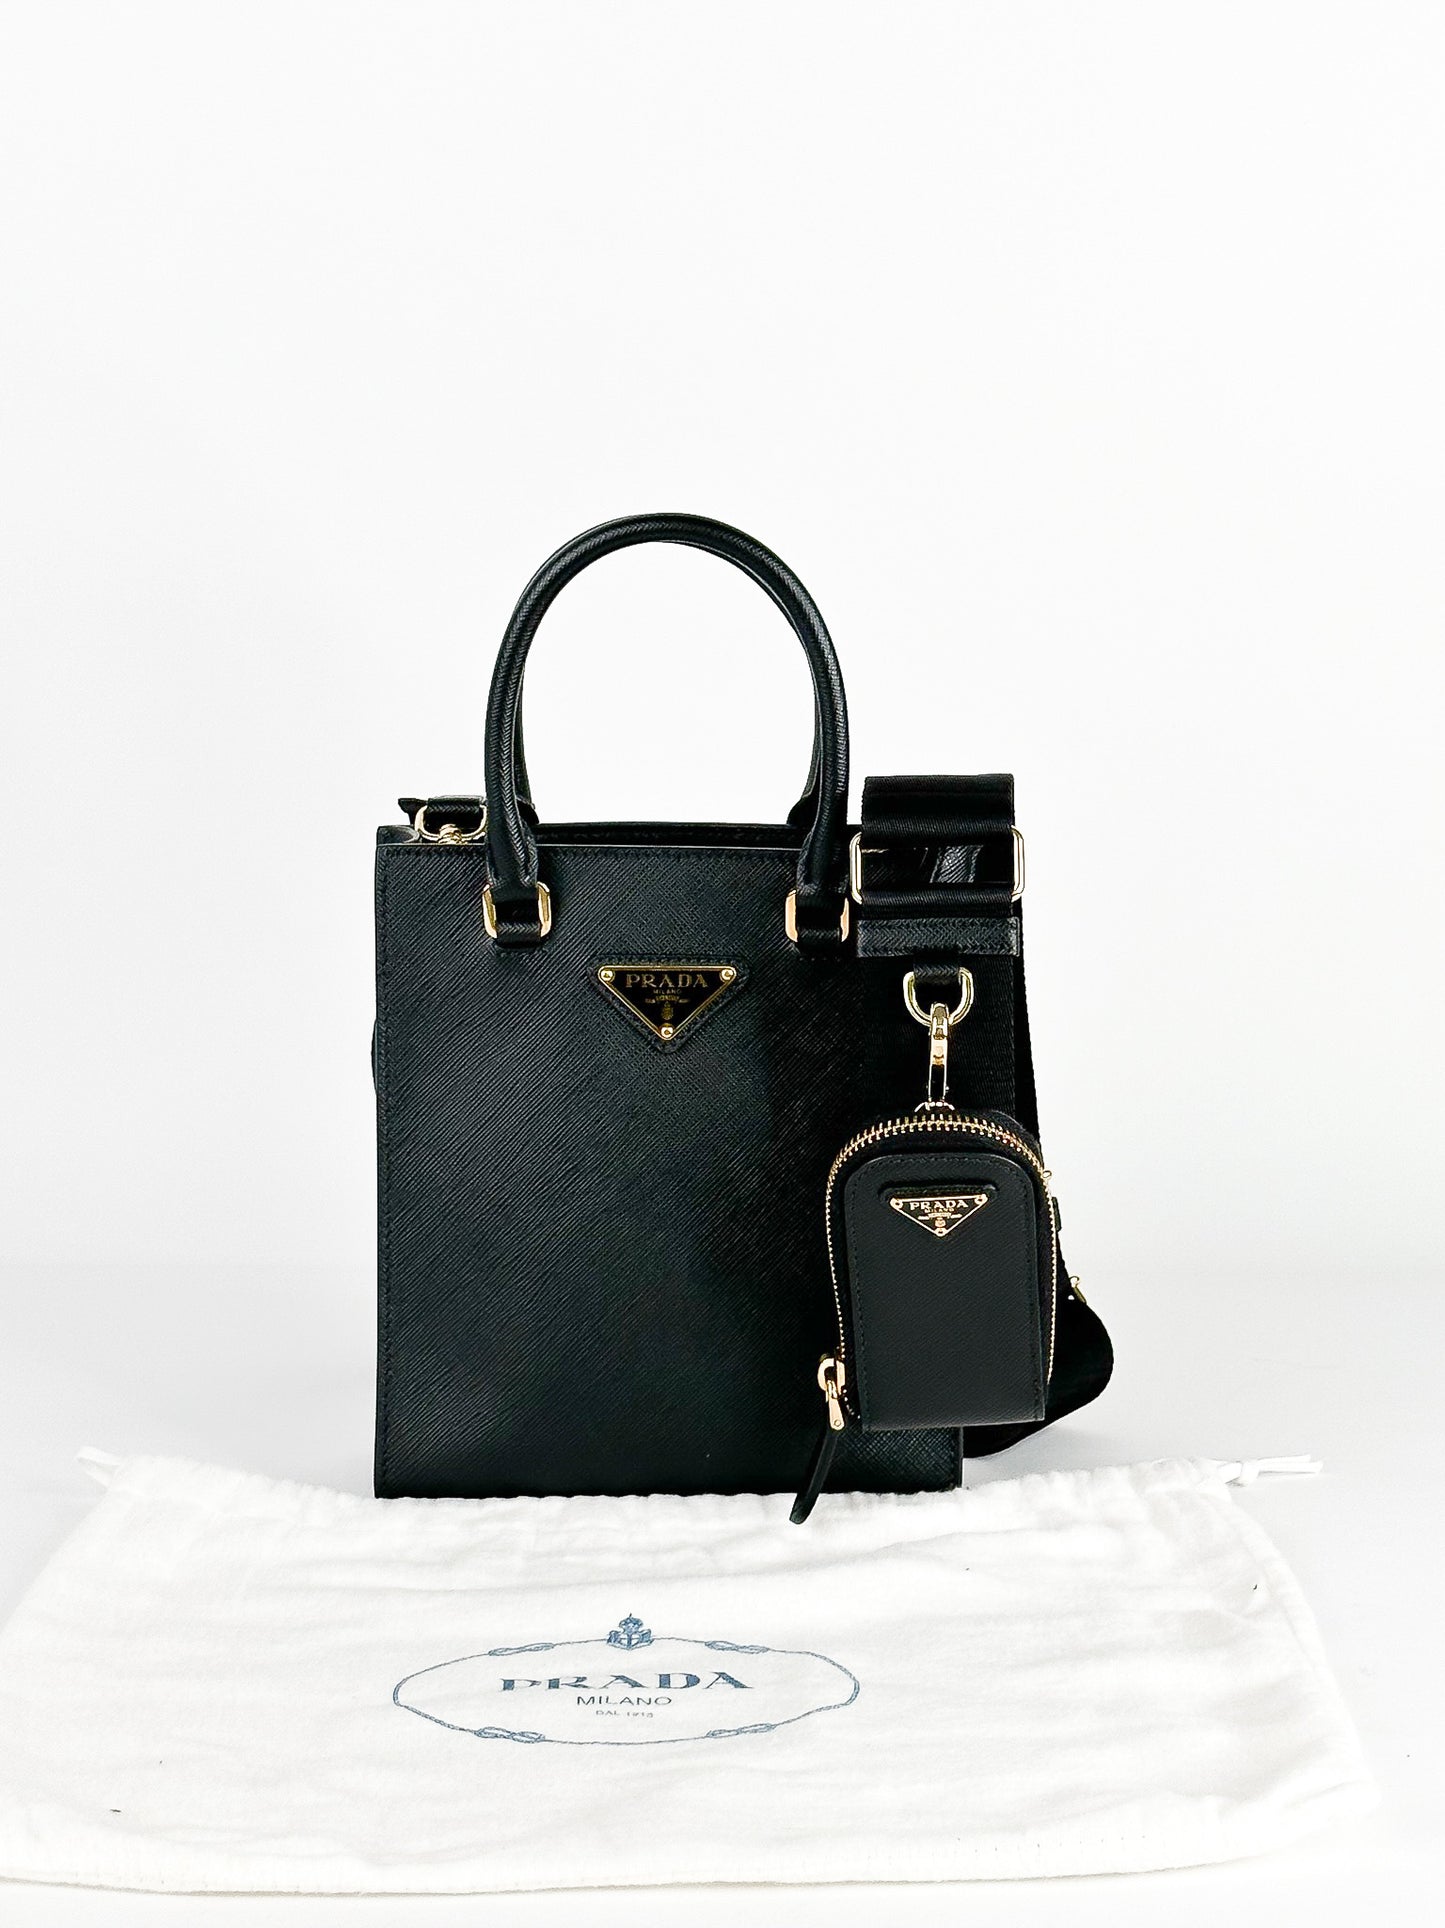 Prada Small Top Handle Bag in Saffiano Leather